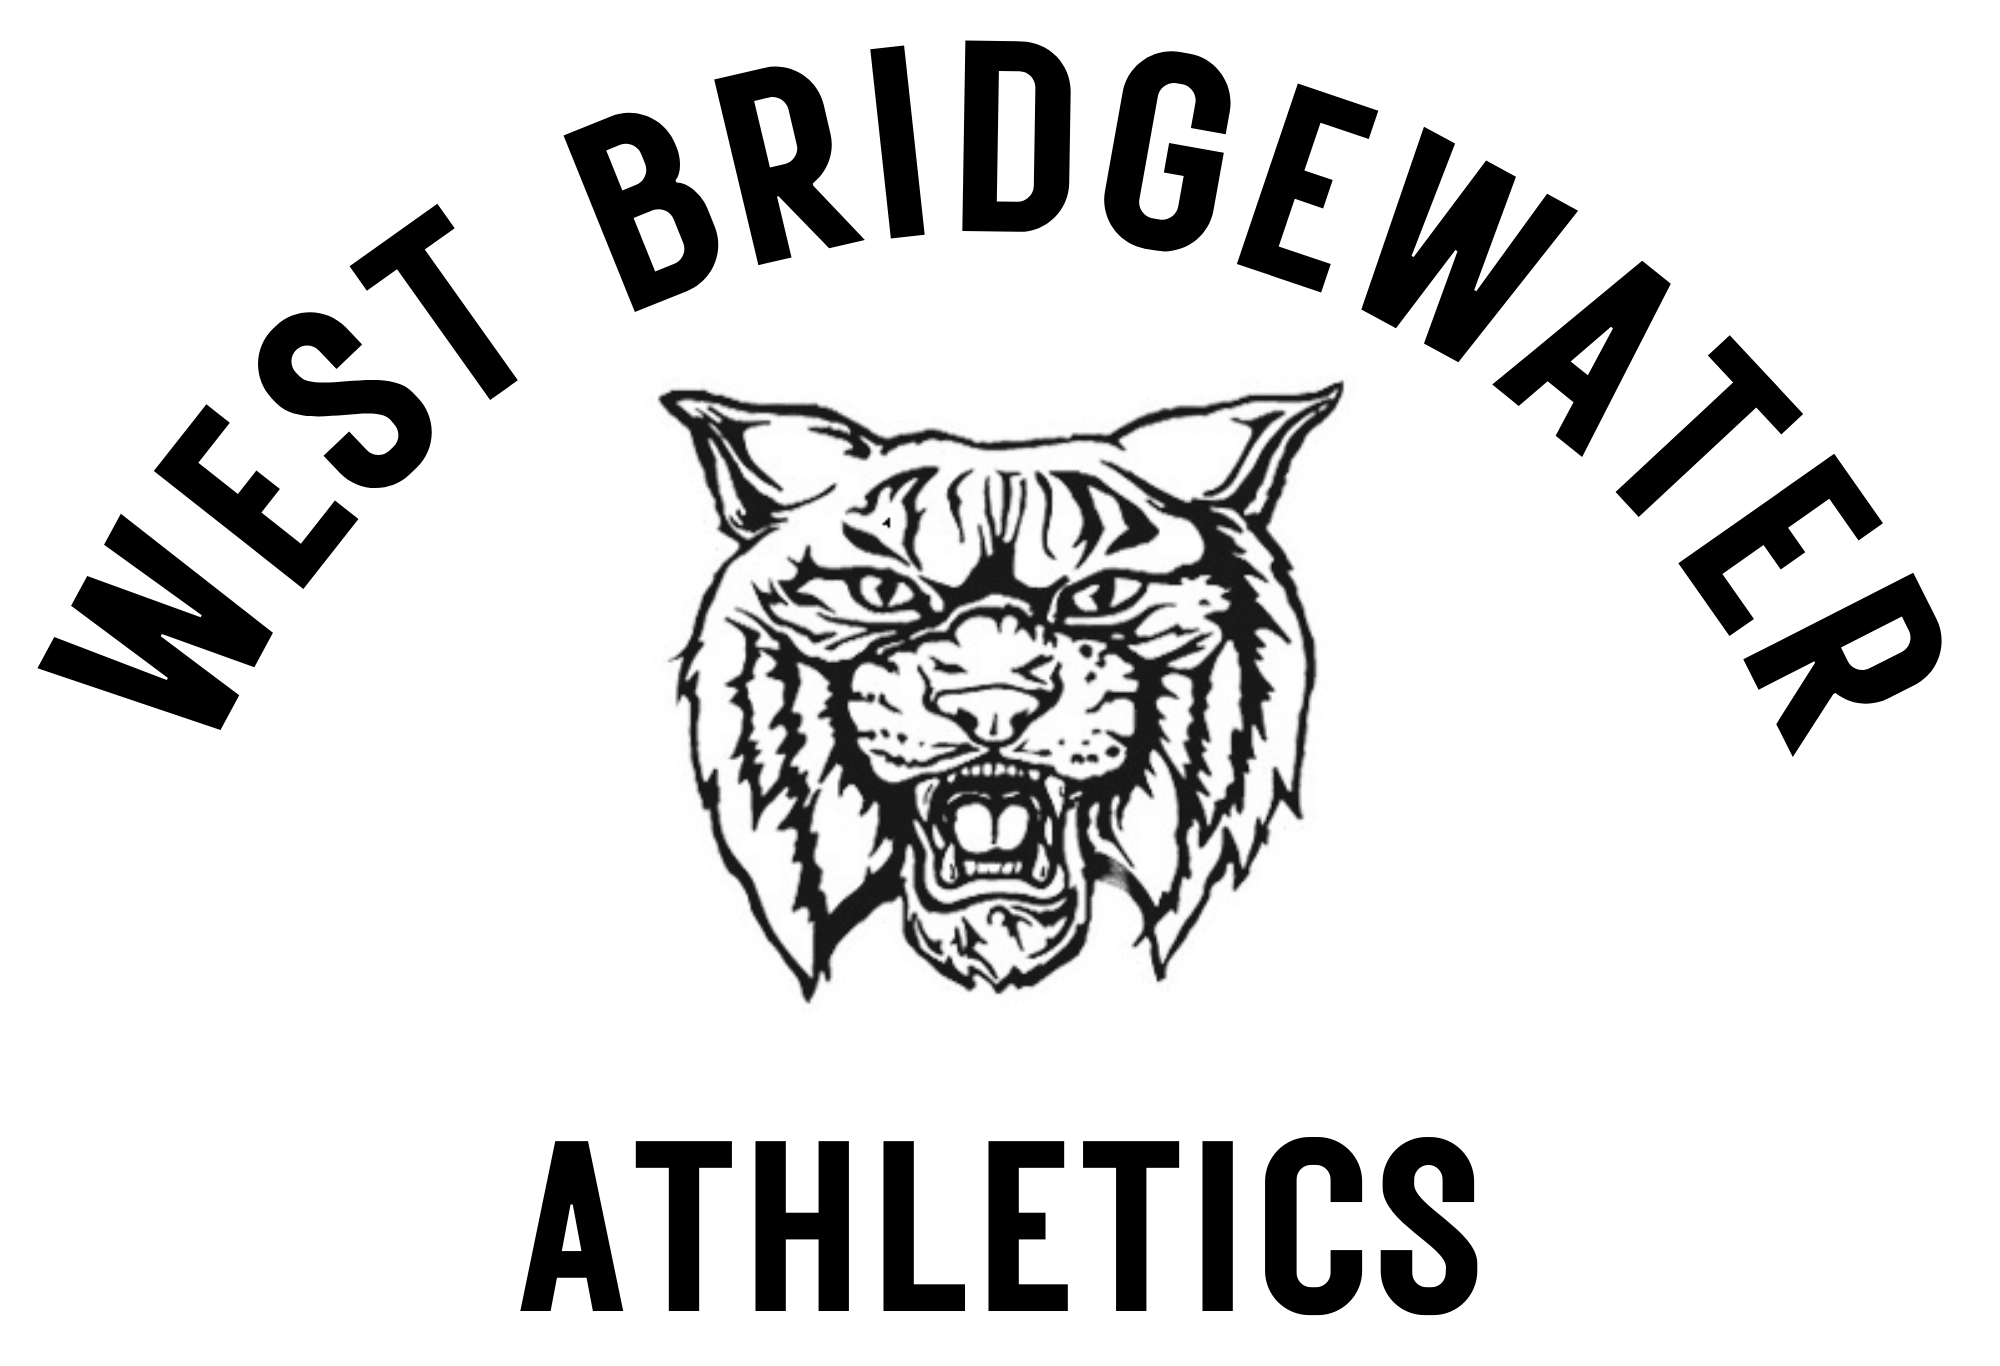 West Bridgewater Athletics